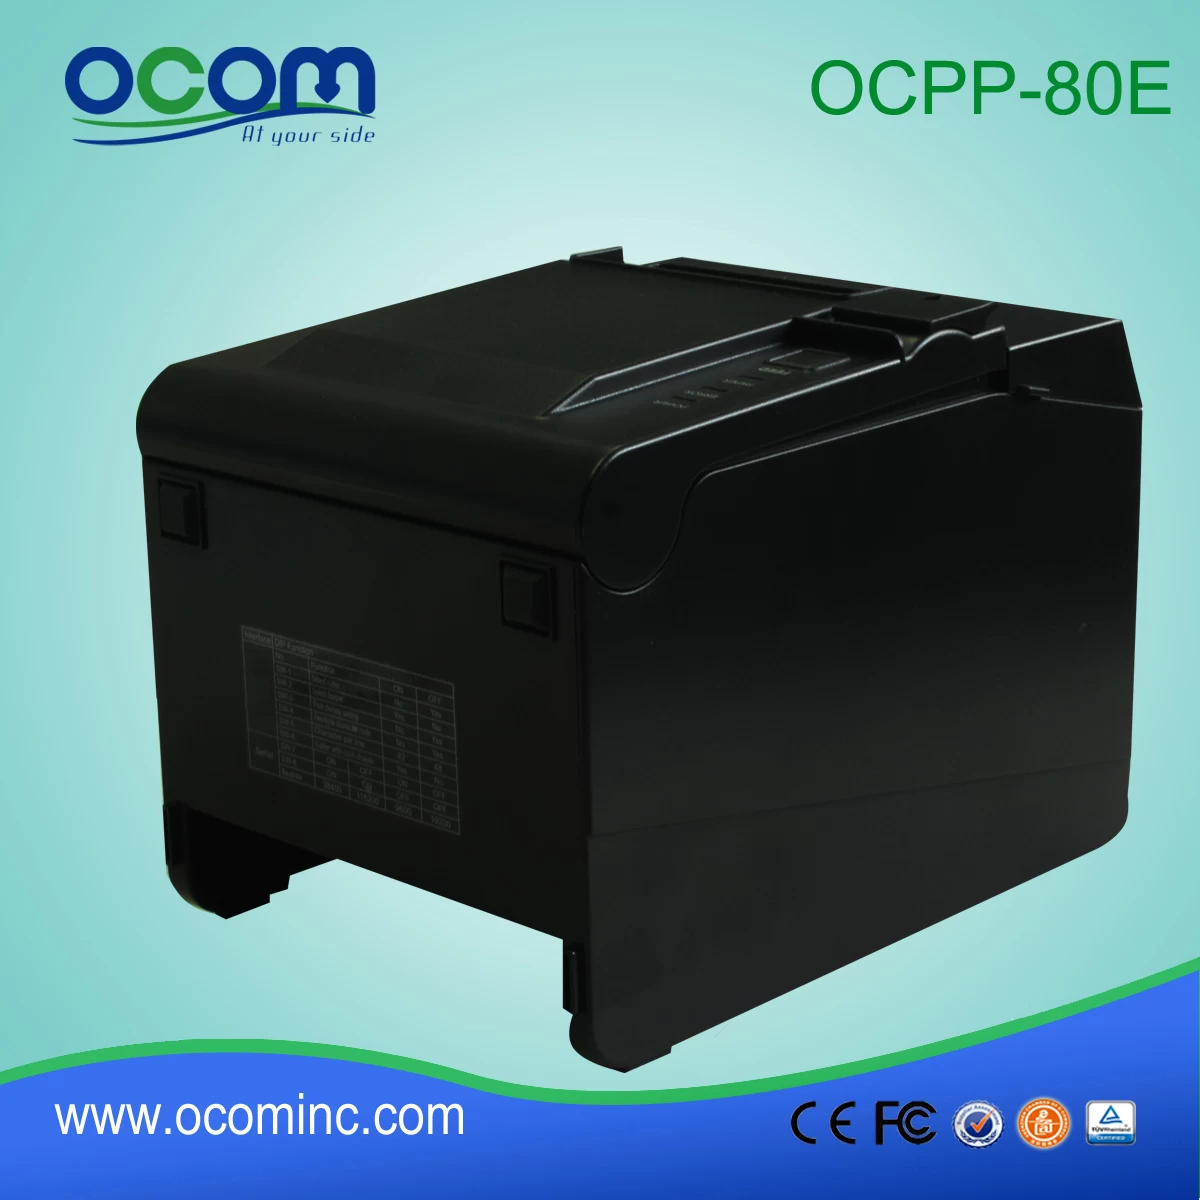 High class 80mm POS receipt printer-OCPP-80E